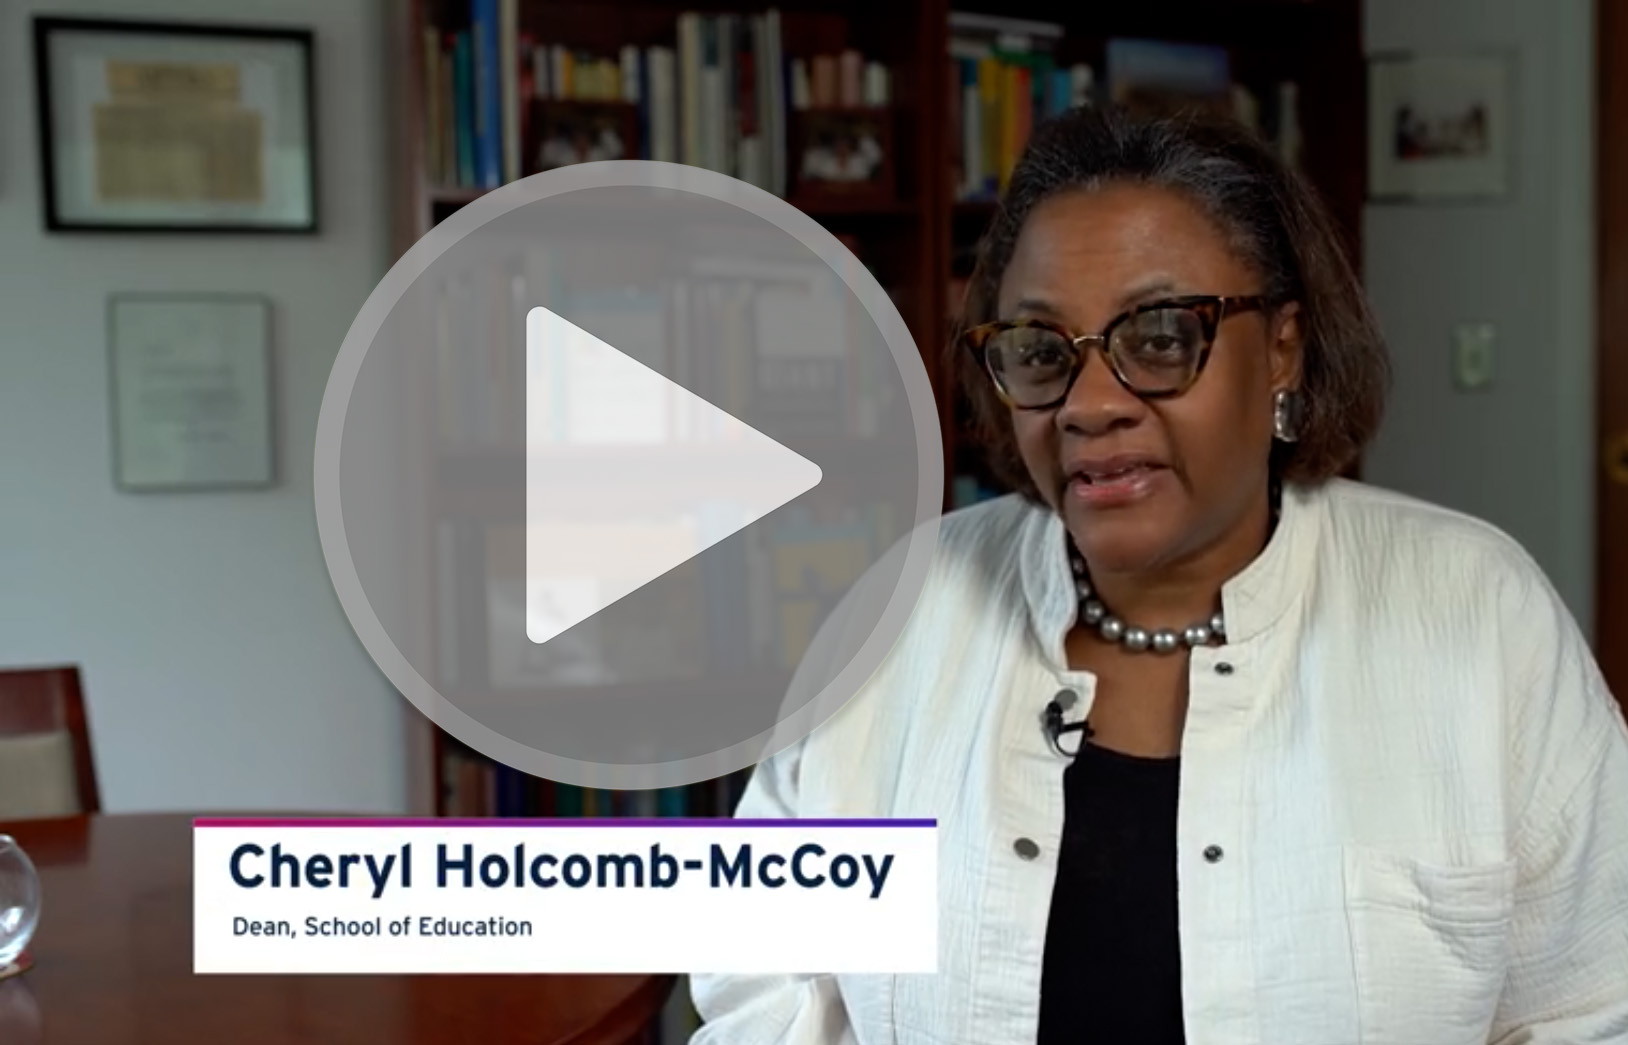 Still from video where Dean Cheryl Holcomb-McCoy explains SOE's mission